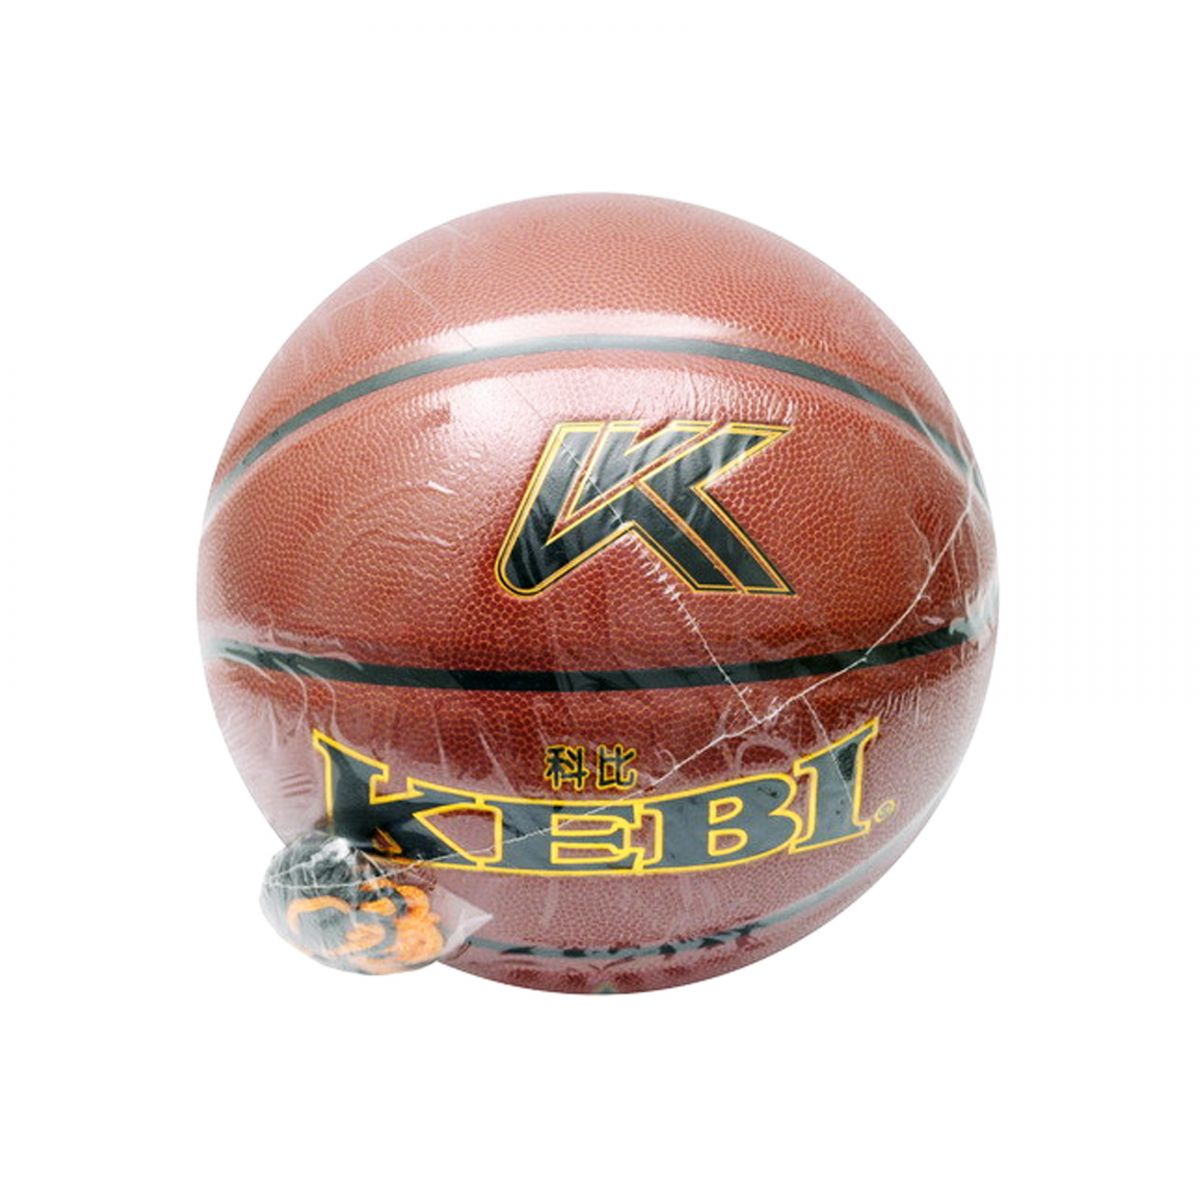 М'яч баскетбольний "Kepai KEBI" (коричневий)